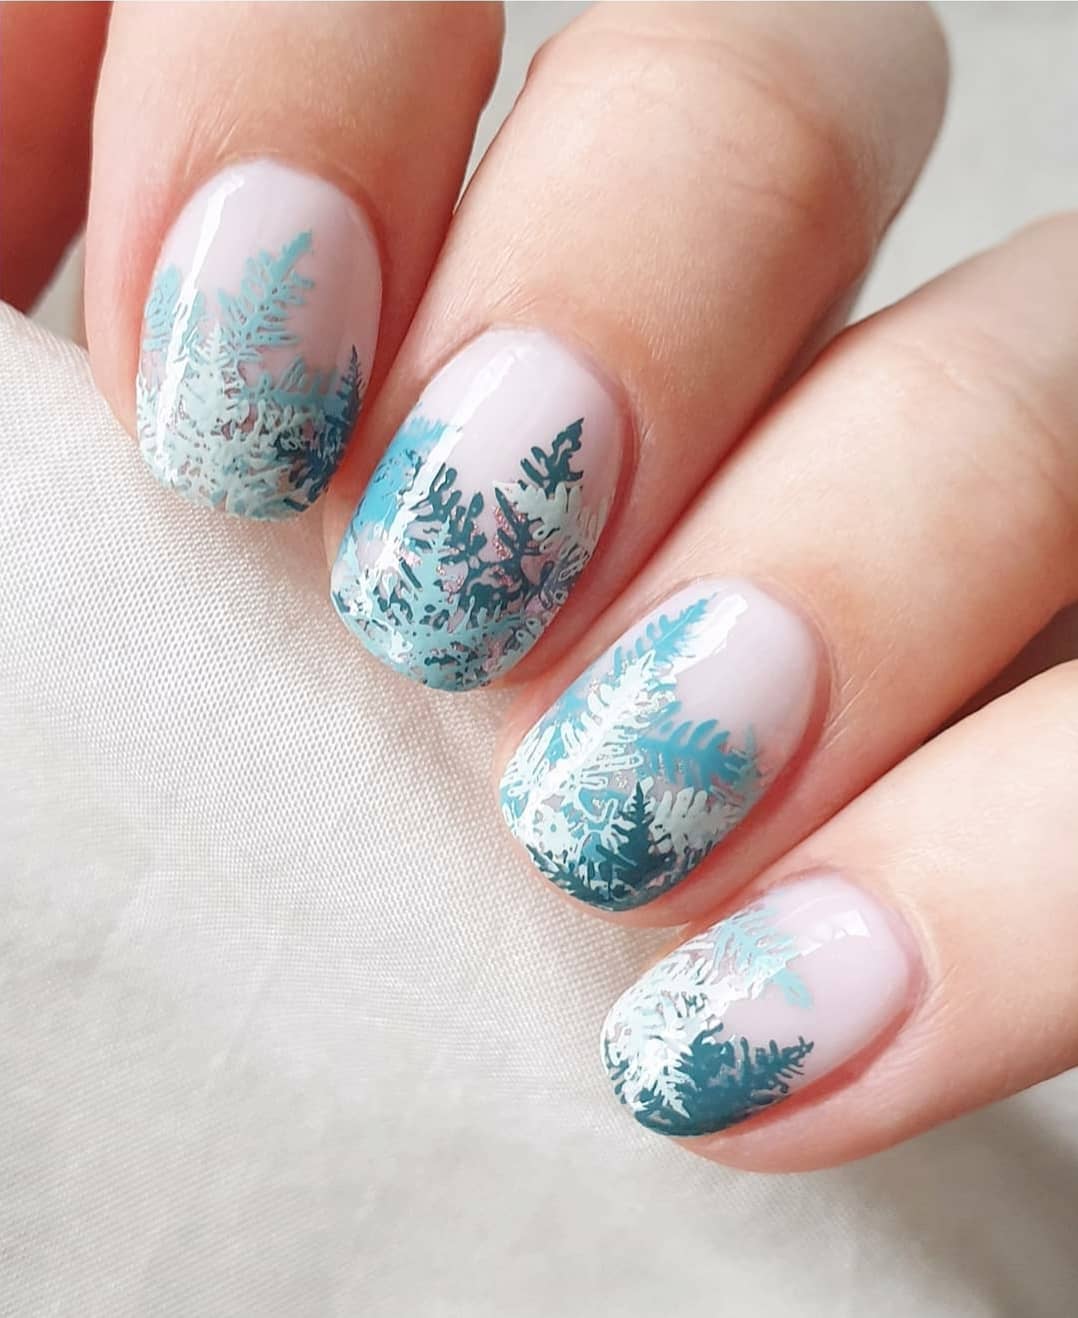  Winter Nail Art Designs Got The Snowflakes